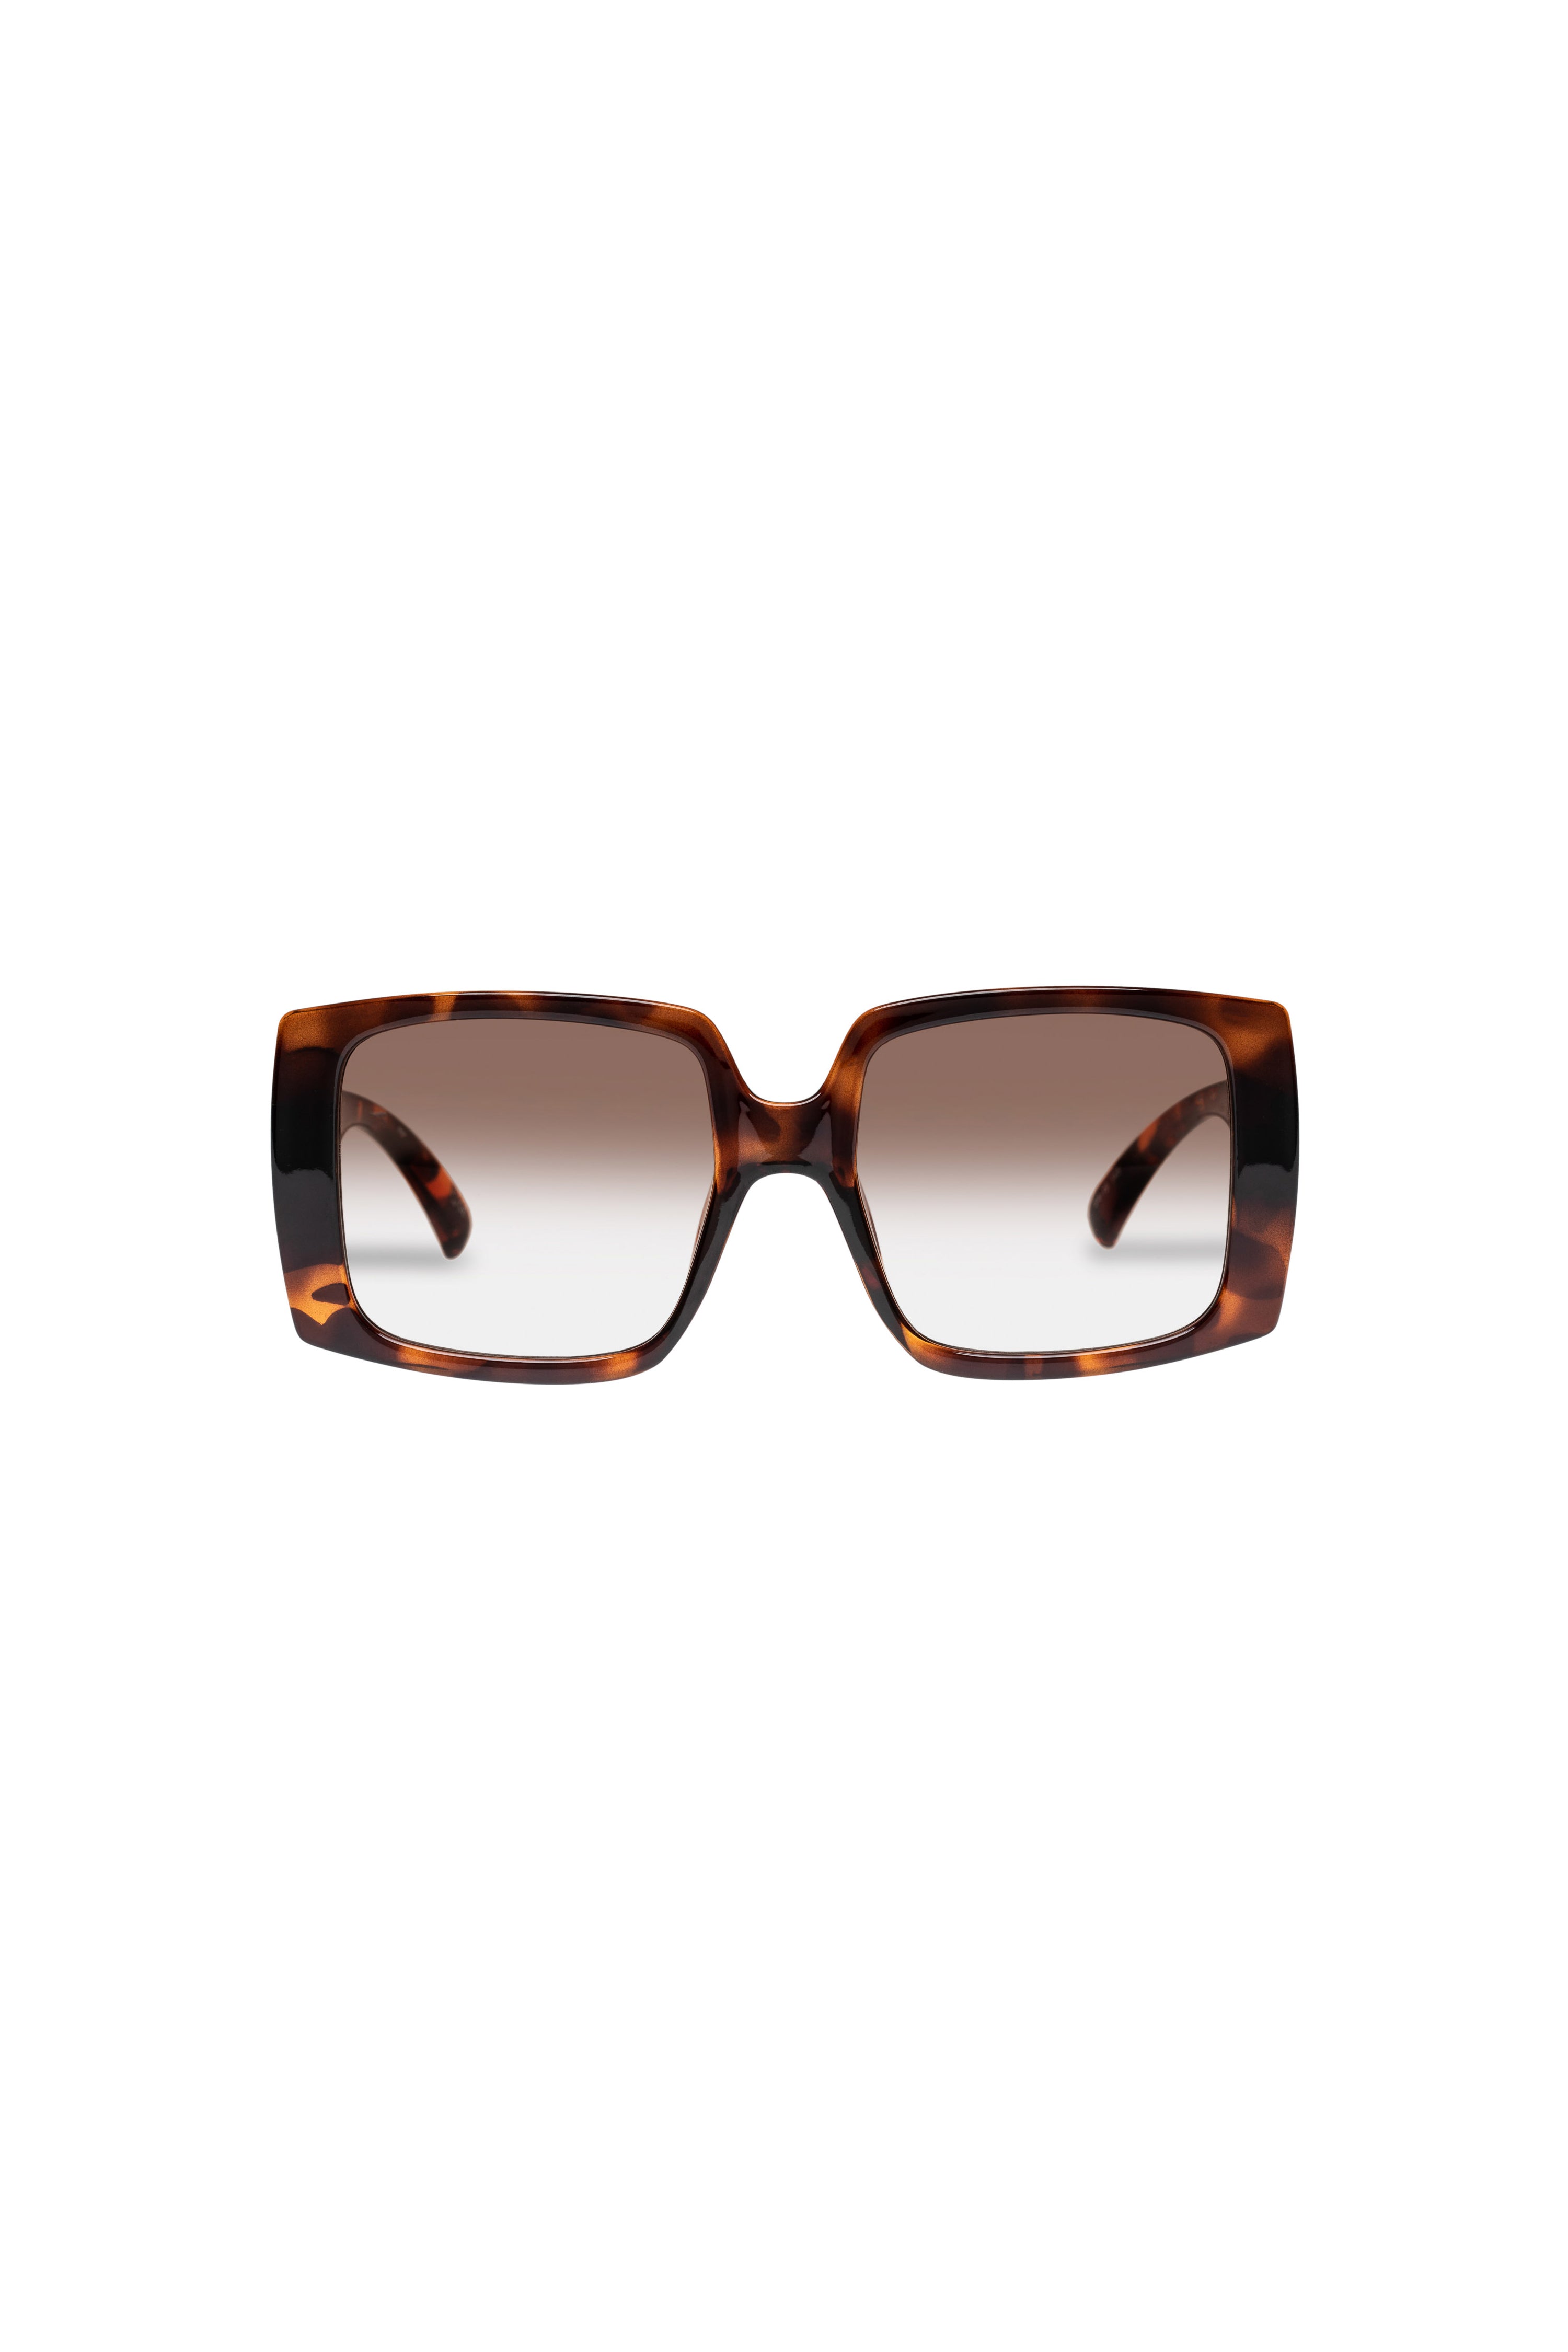 Le Specs Glo Getter Sunglasses - Tortoise - RUM Amsterdam